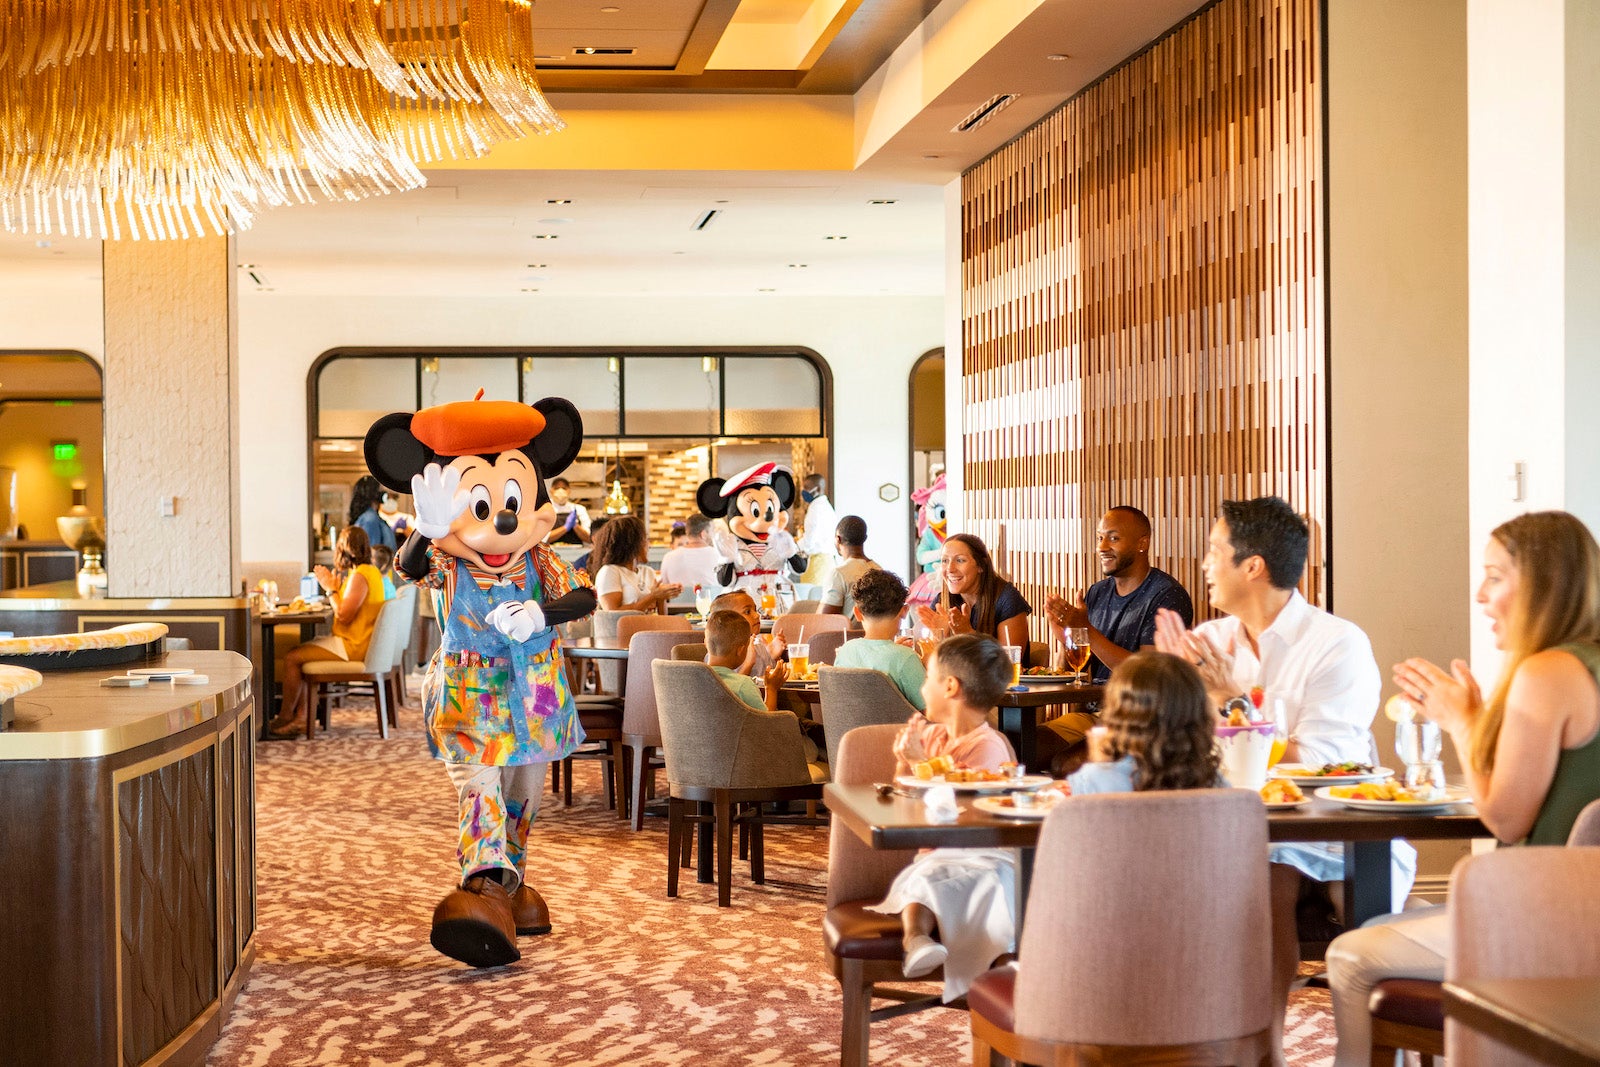 Guests at Disney’s Riviera Resort